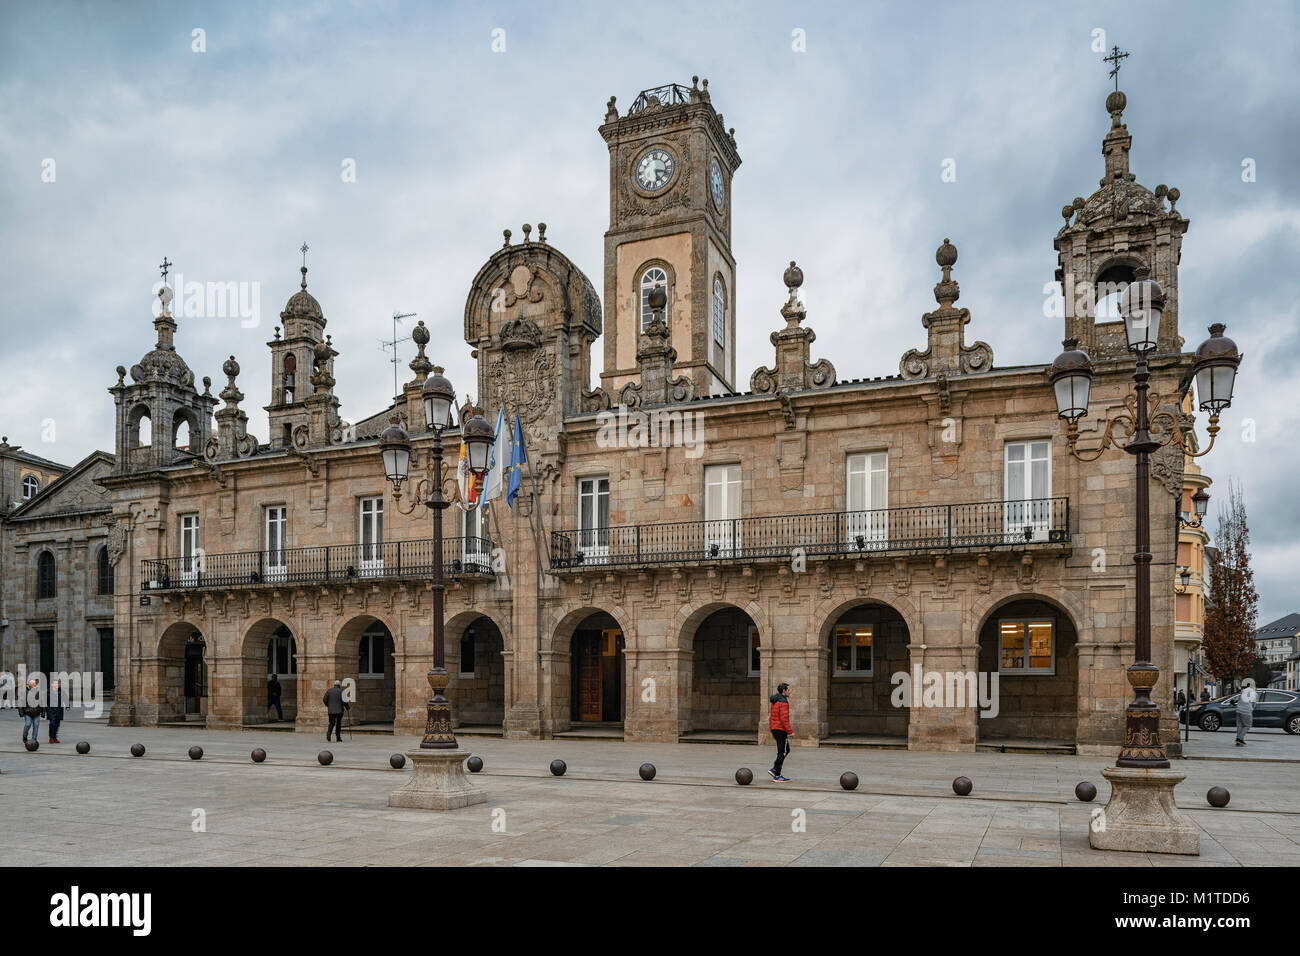 Building Of The Town Hall Of The City Of Lugo In The Main Square Architect Antonio Ferro Gaveiro Galicia Spain Stock Photo Alamy